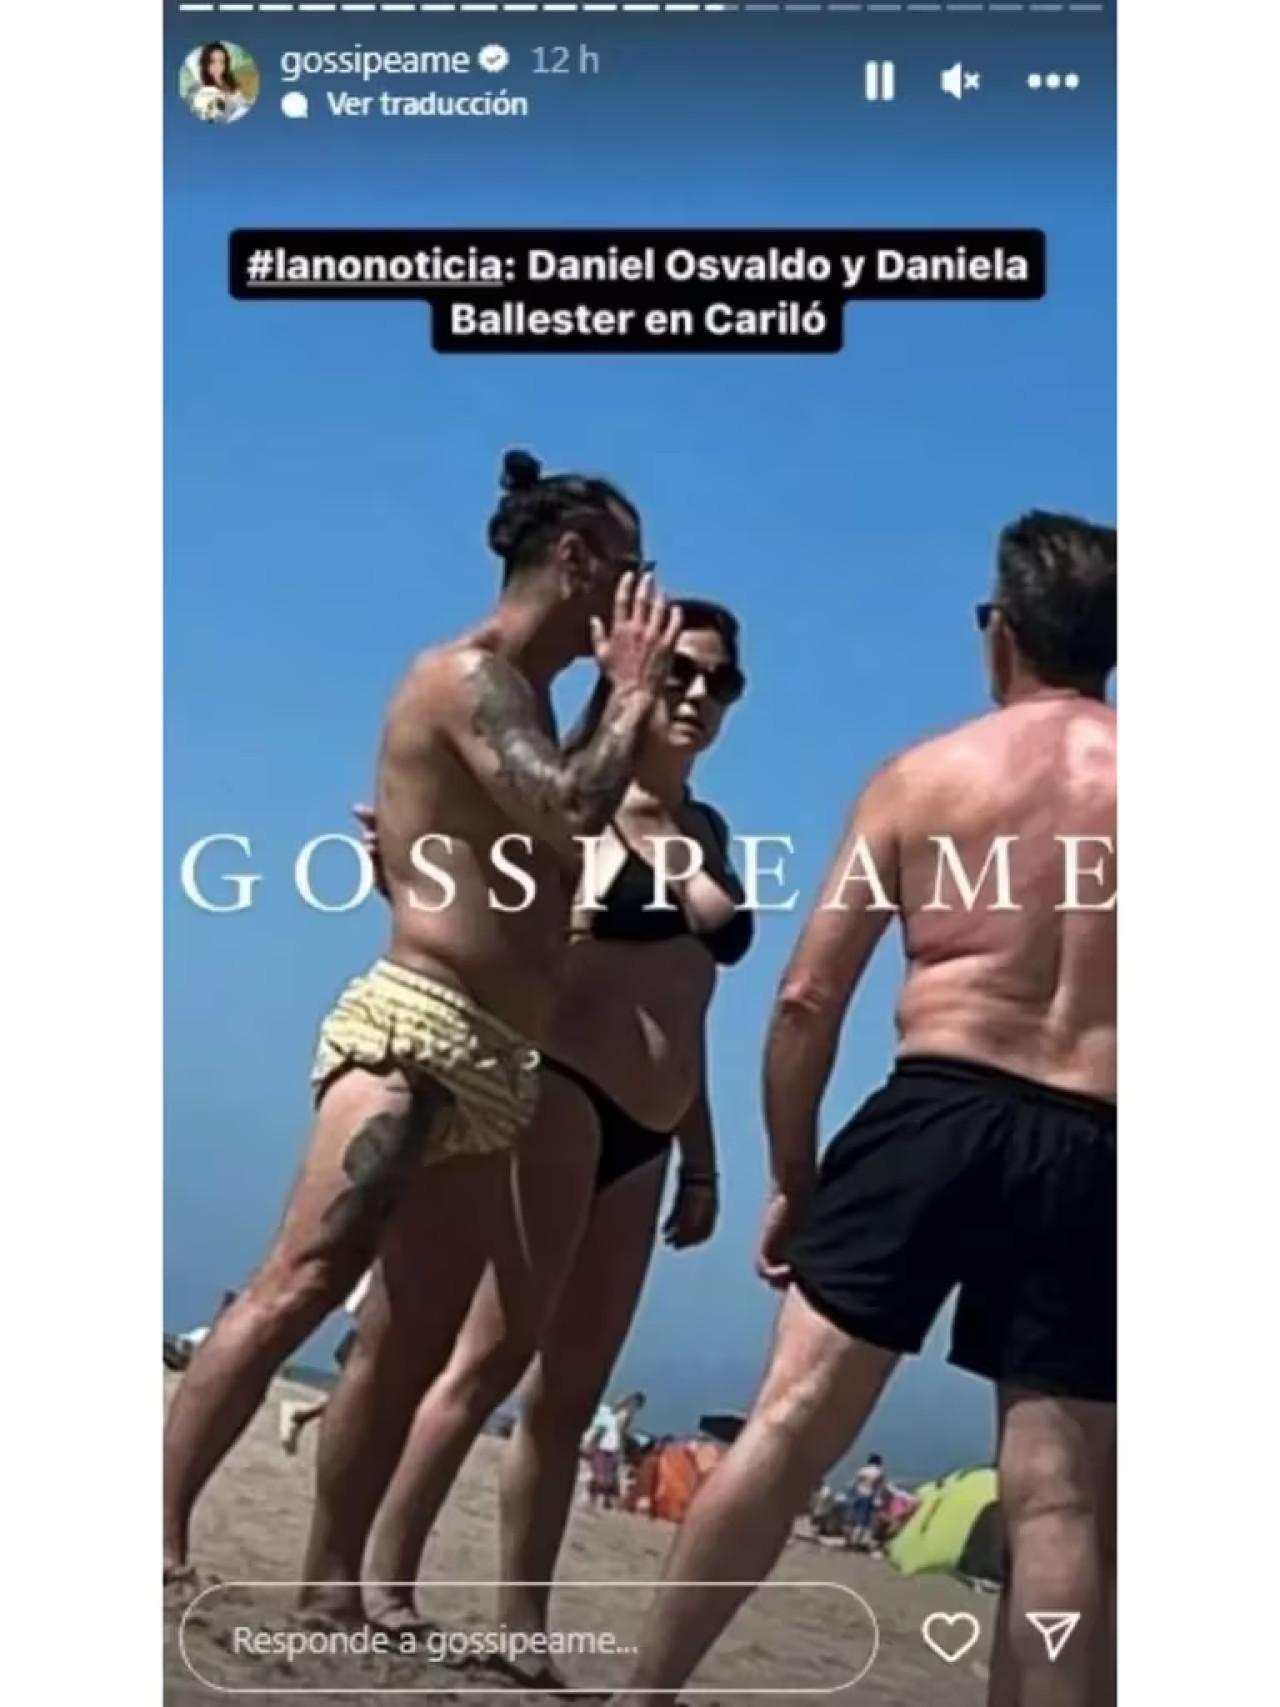 Daniel Osvaldo y Daniela Balles en las playas de Cariló. Foto: Instagram/ @gossipeame